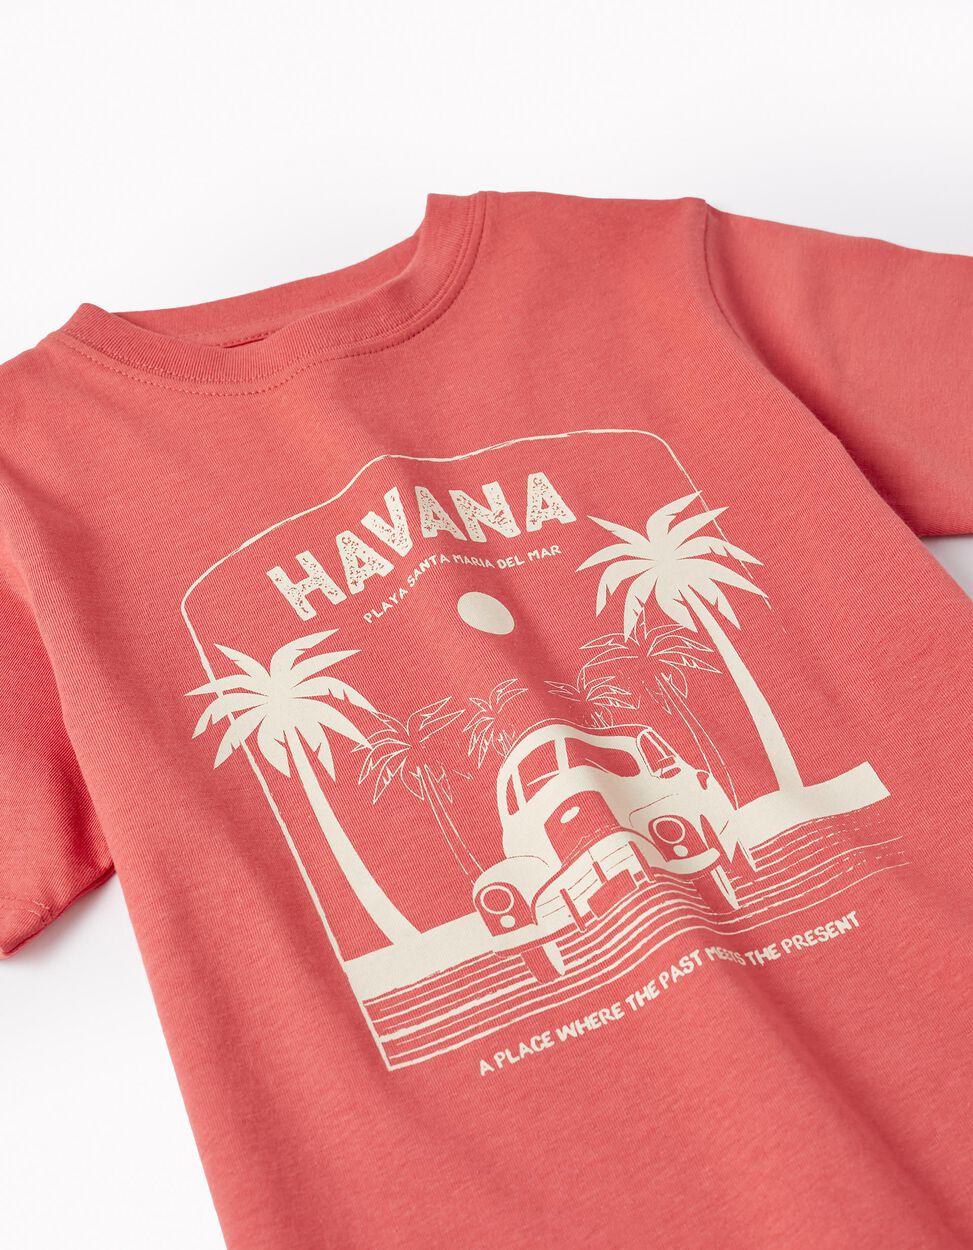 Buy Online Cotton T-shirt for Boys 'Havana', Red